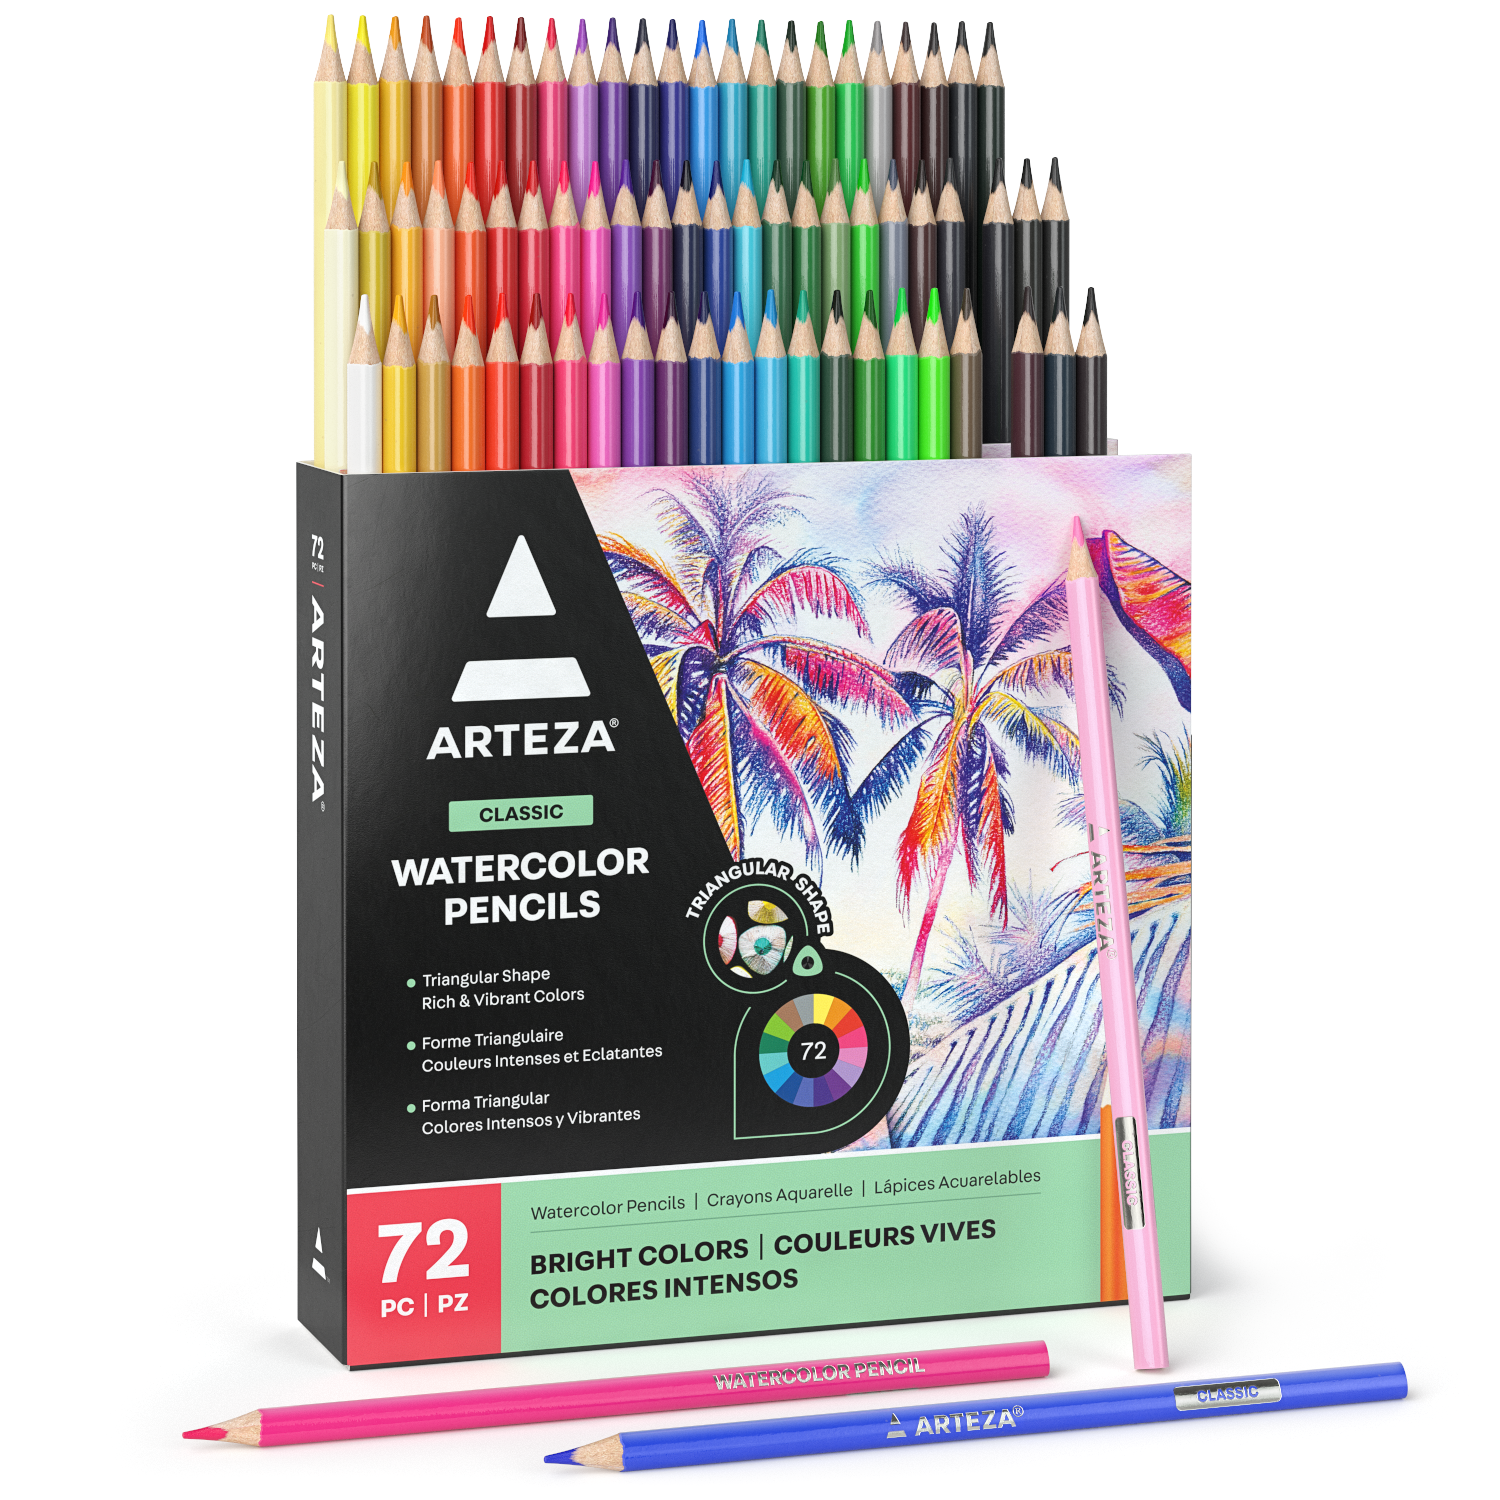 Arteza Professional Drawing, Sketching Pencils (Set of 12)